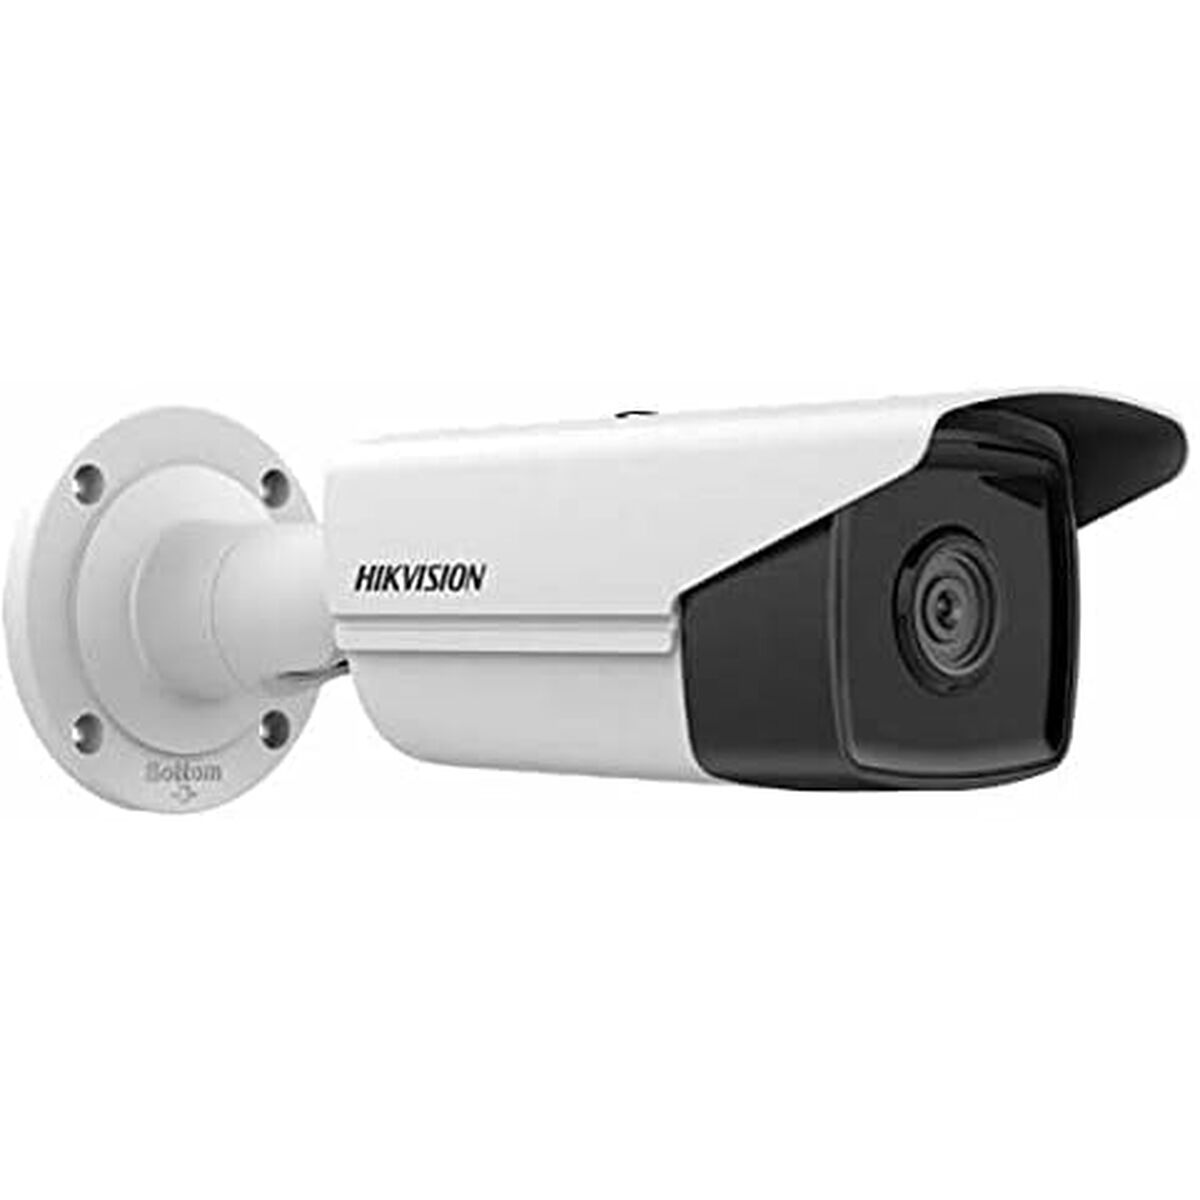 IP-kamera Hikvision DS-2CD2T43G2-4I(4mm) Full HD